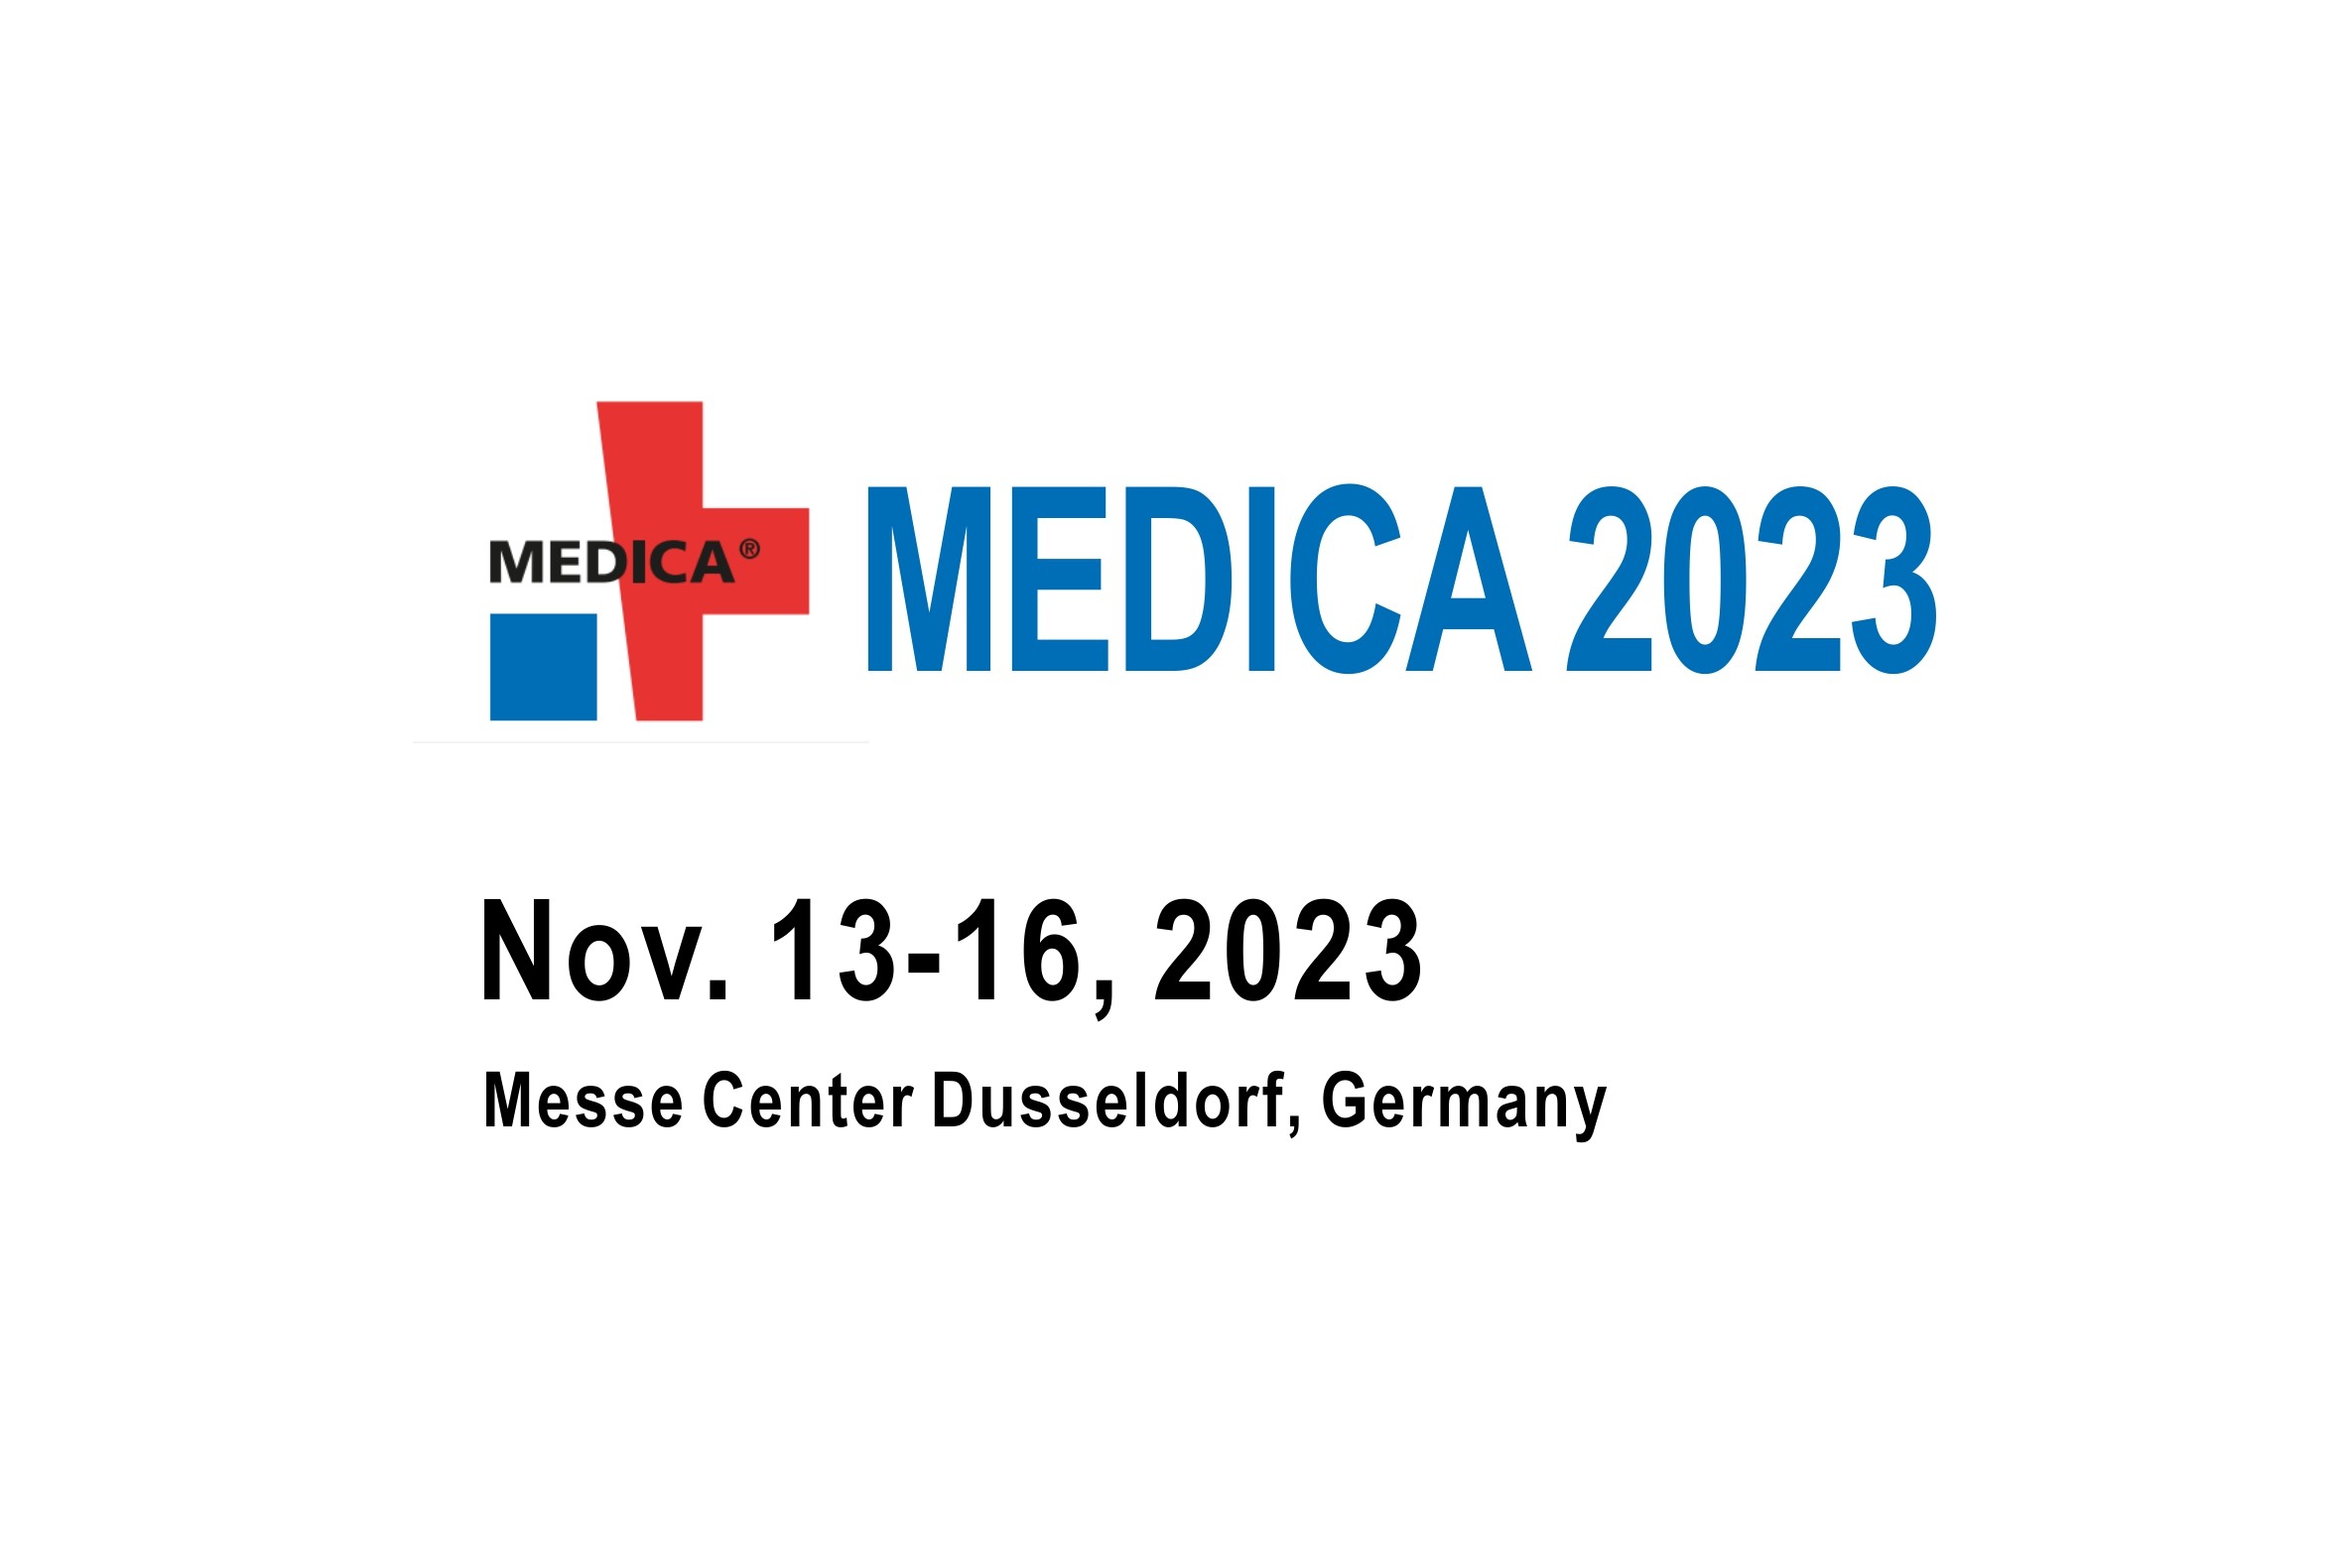 Please visit us at MEDICA 2023